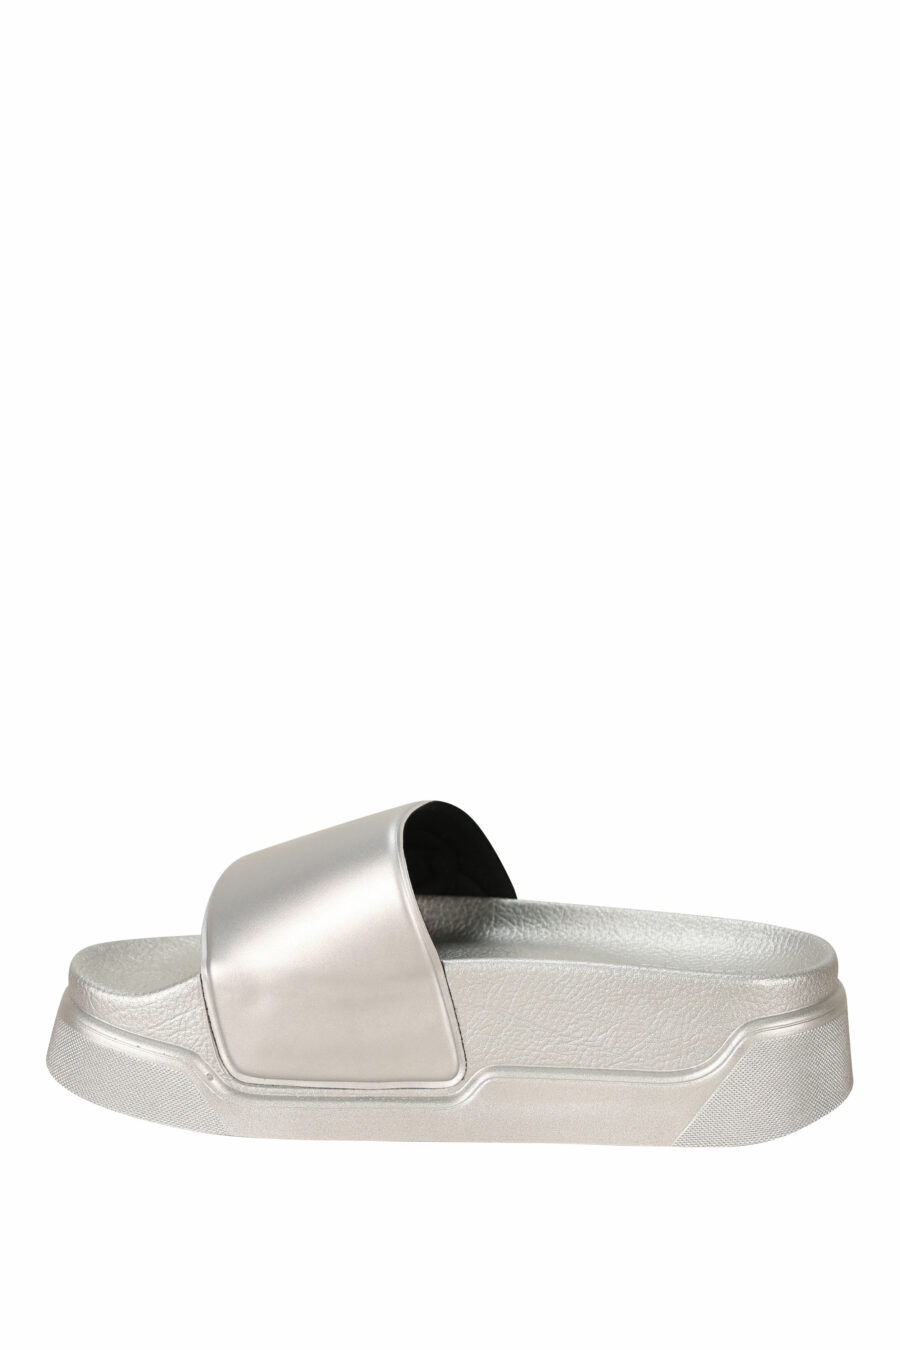 Silver platform sandals with "karl" logo - 5059529404849 2